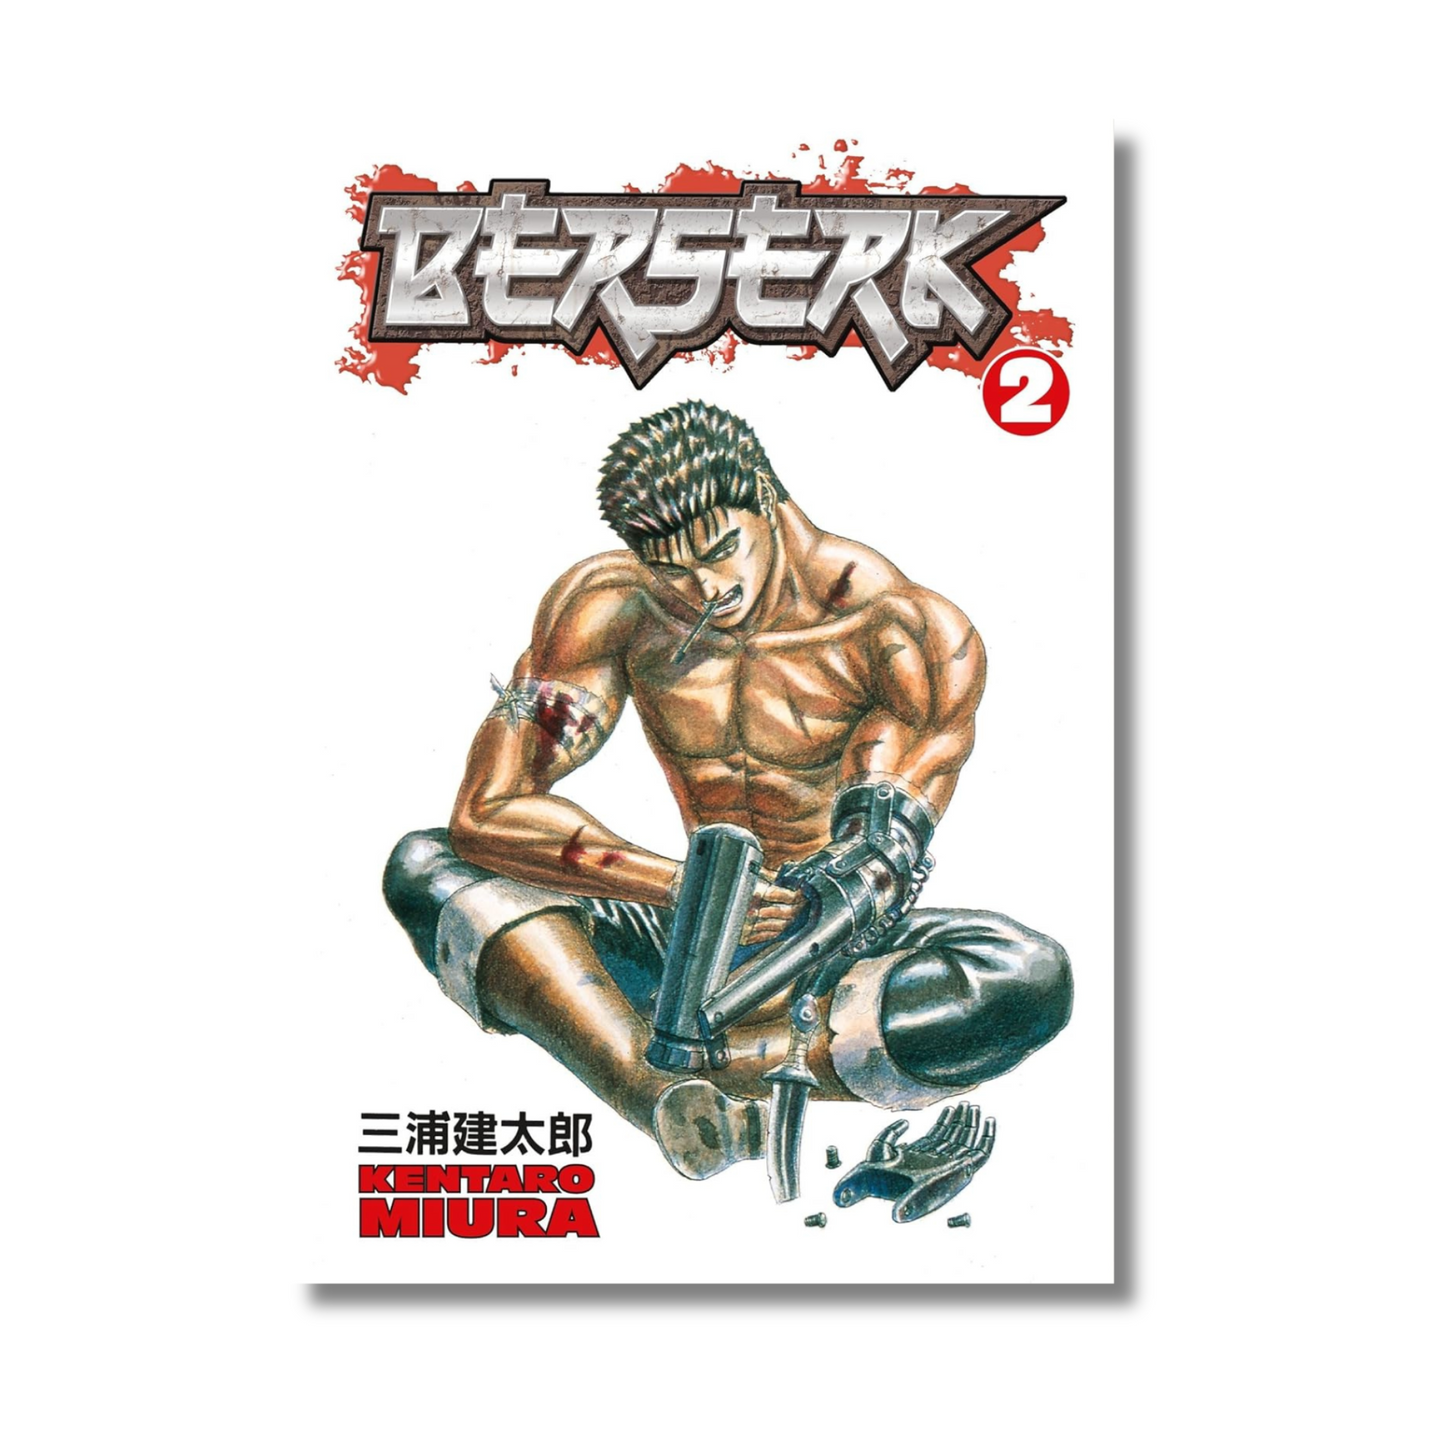 Berserk Volume 2 by Kentaro Miura (Paperback)